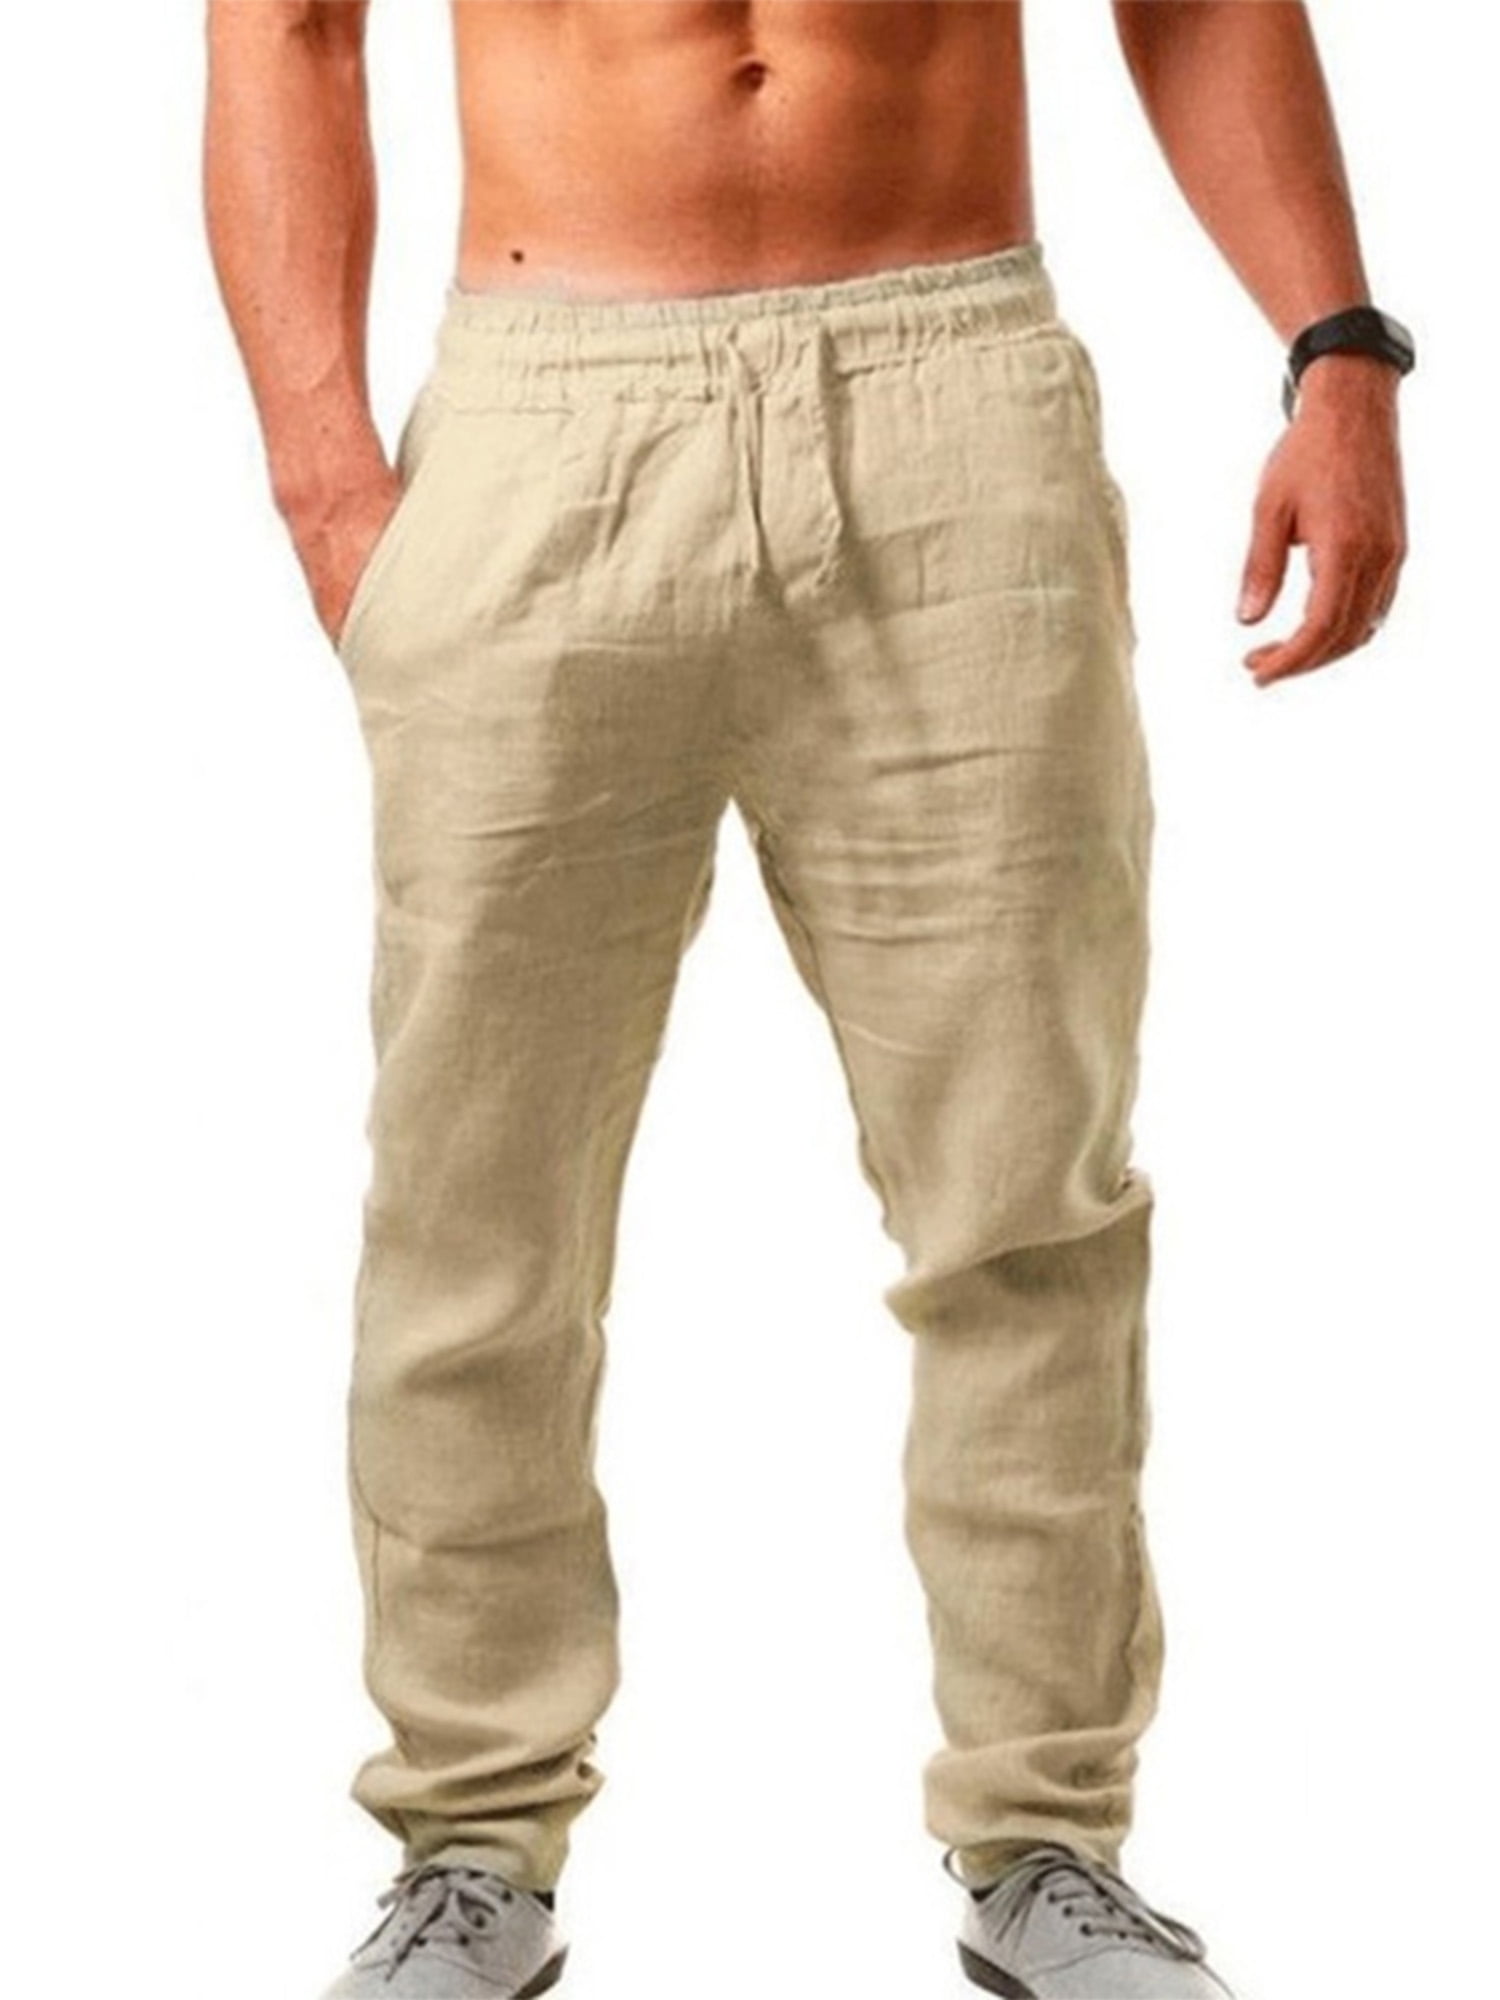 Mens Loose Linen Pants Casual Beach Yoga Drawstring Long Trousers Slacks S-5XL